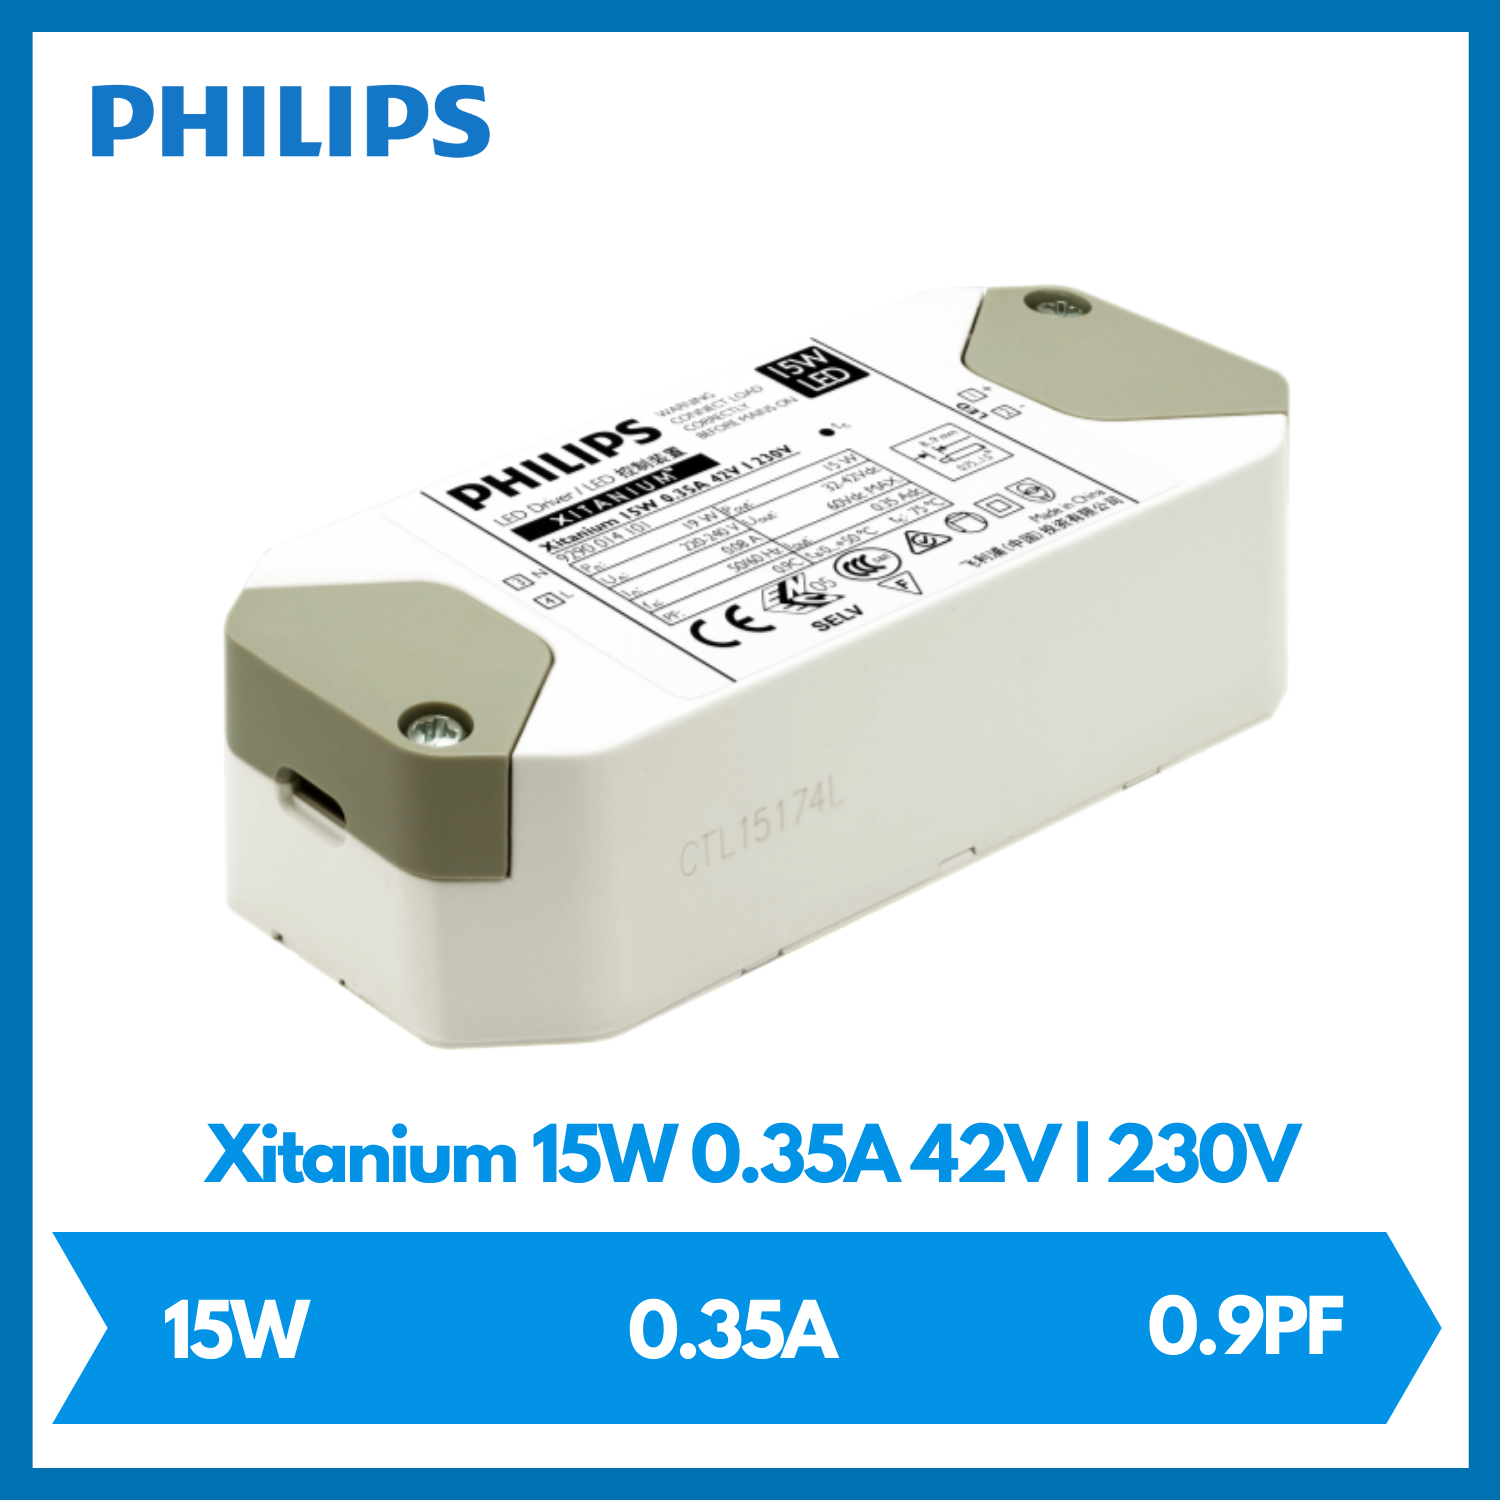 PHILIPS Xitanium 15W 0.35A 42V I230V